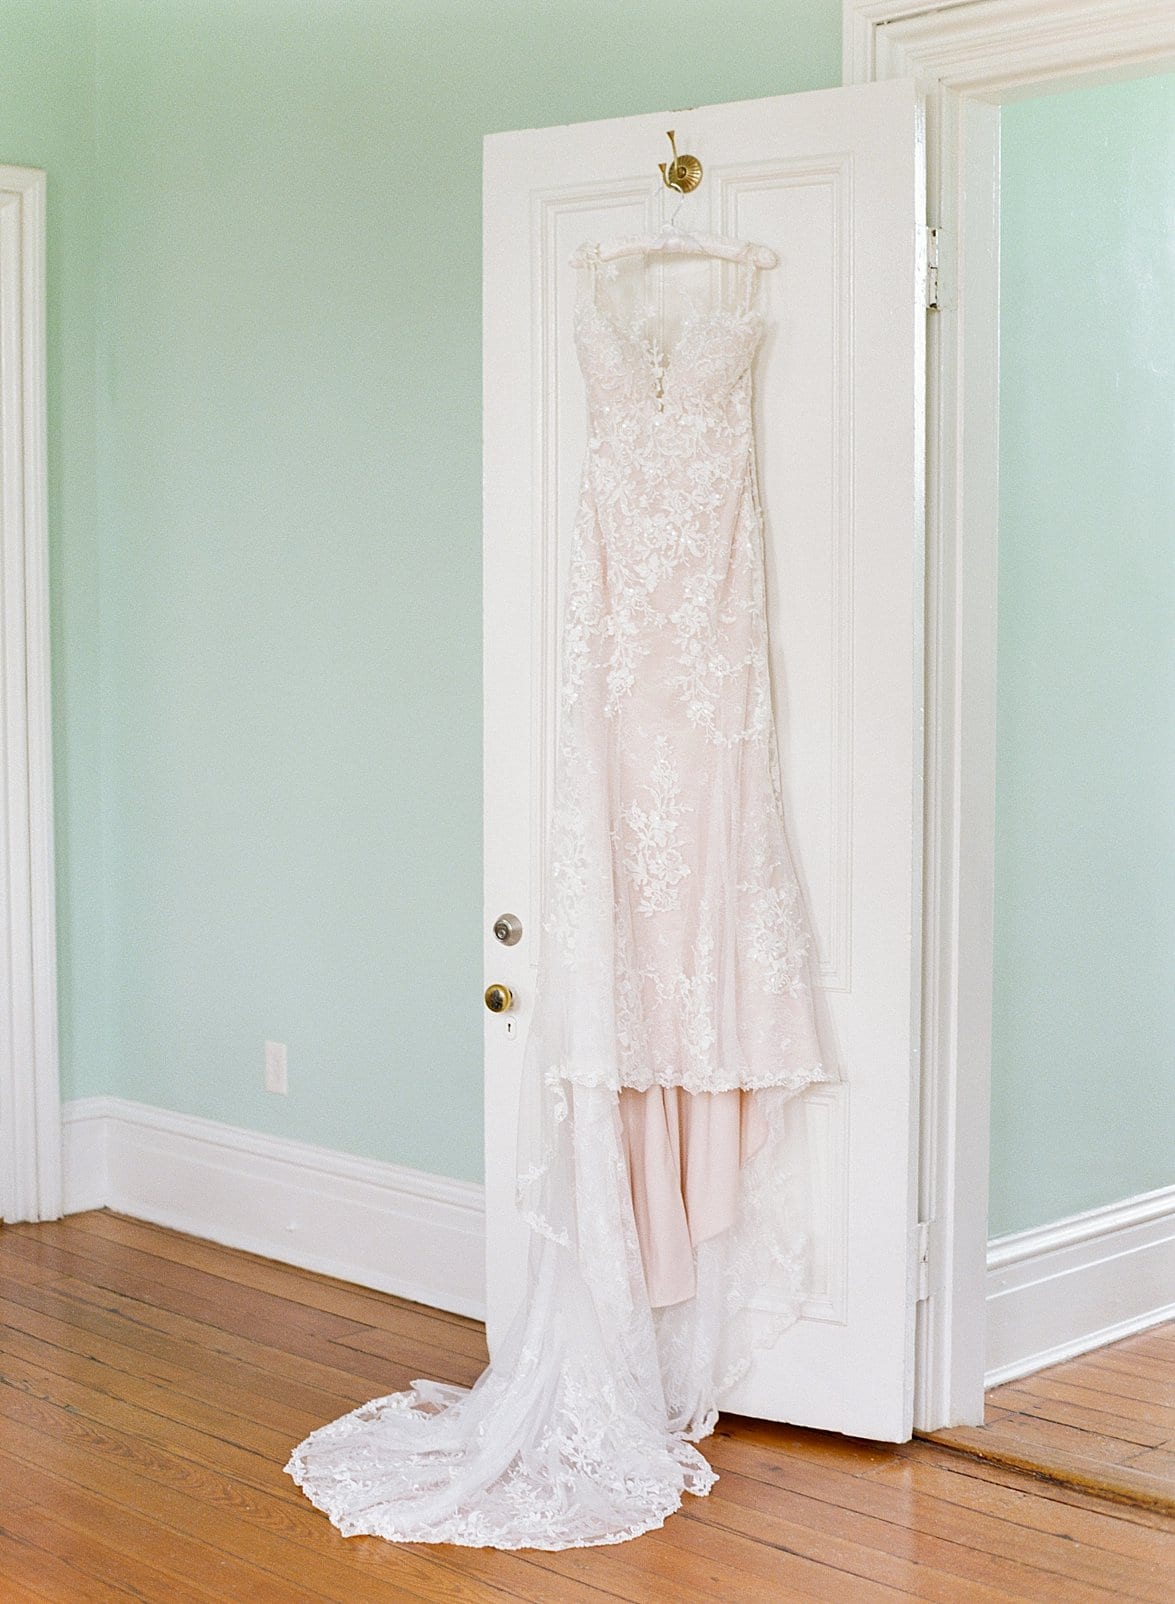 Lana Addison wedding gown designed by Essense of Australia photo